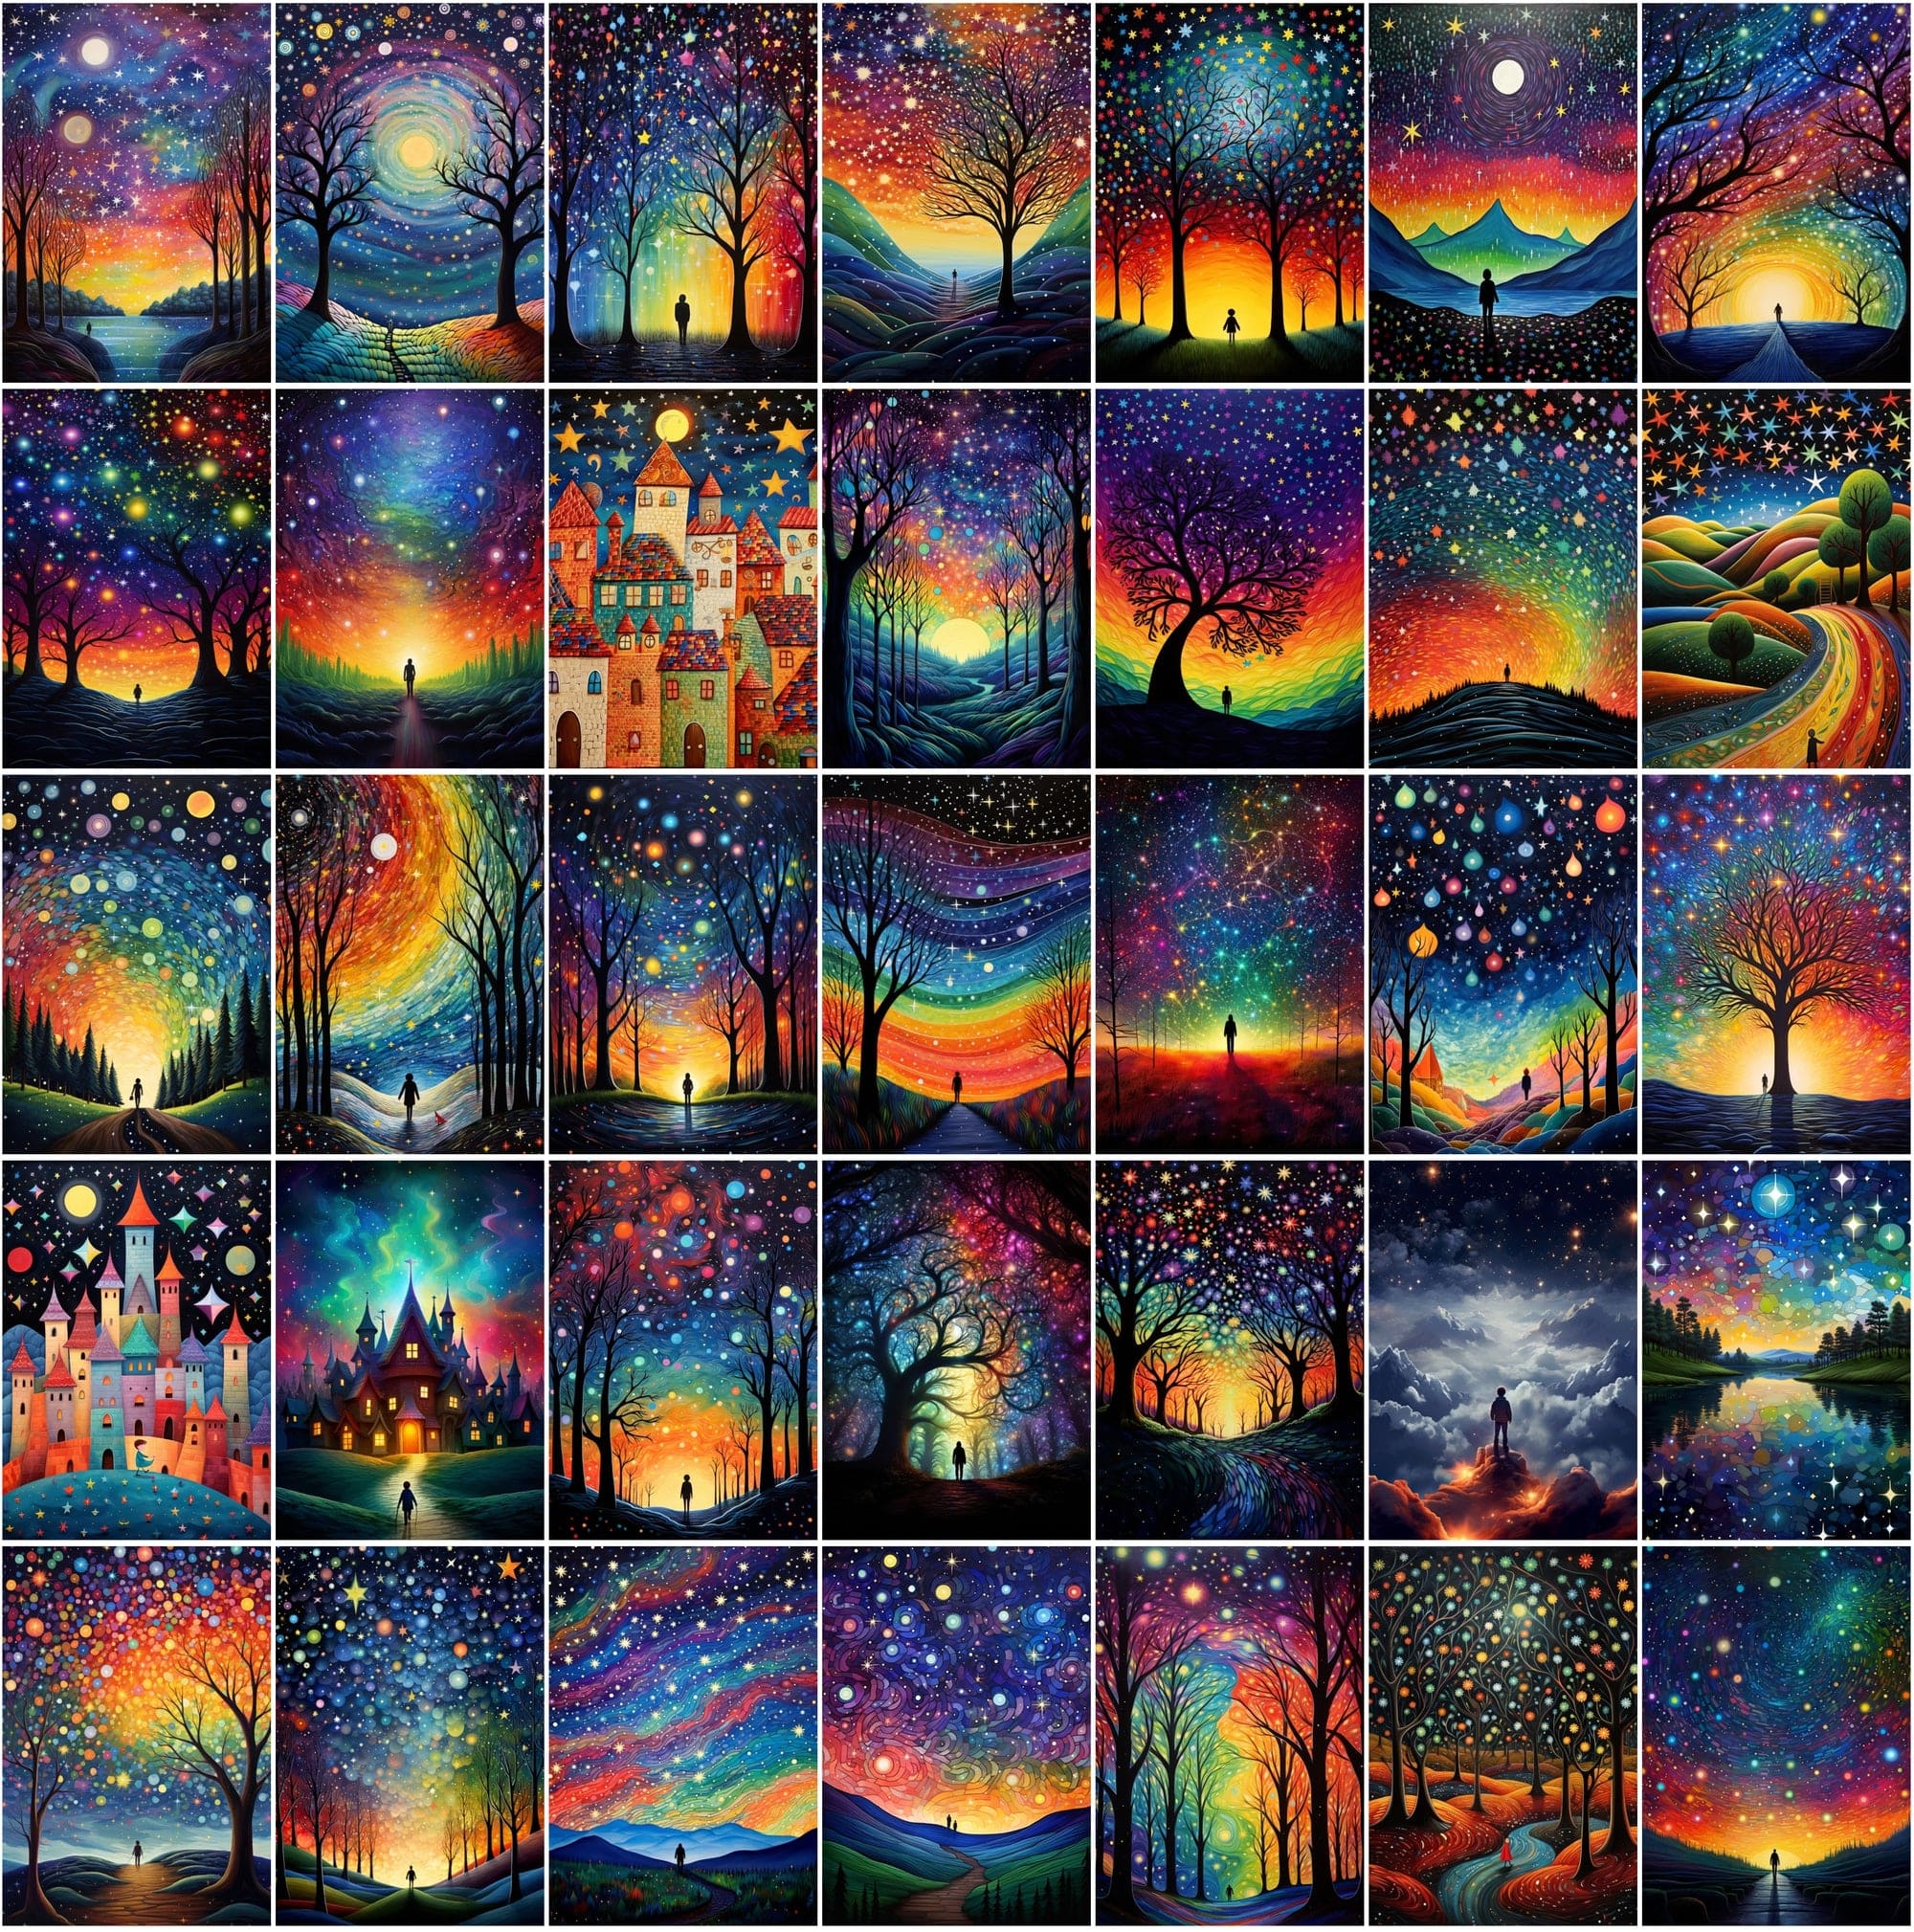 Celestial Landscape Images Bundle, Colorful Starry Night Sky Photos, High-Resolution Digital Art with Commercial License Digital Download Sumobundle